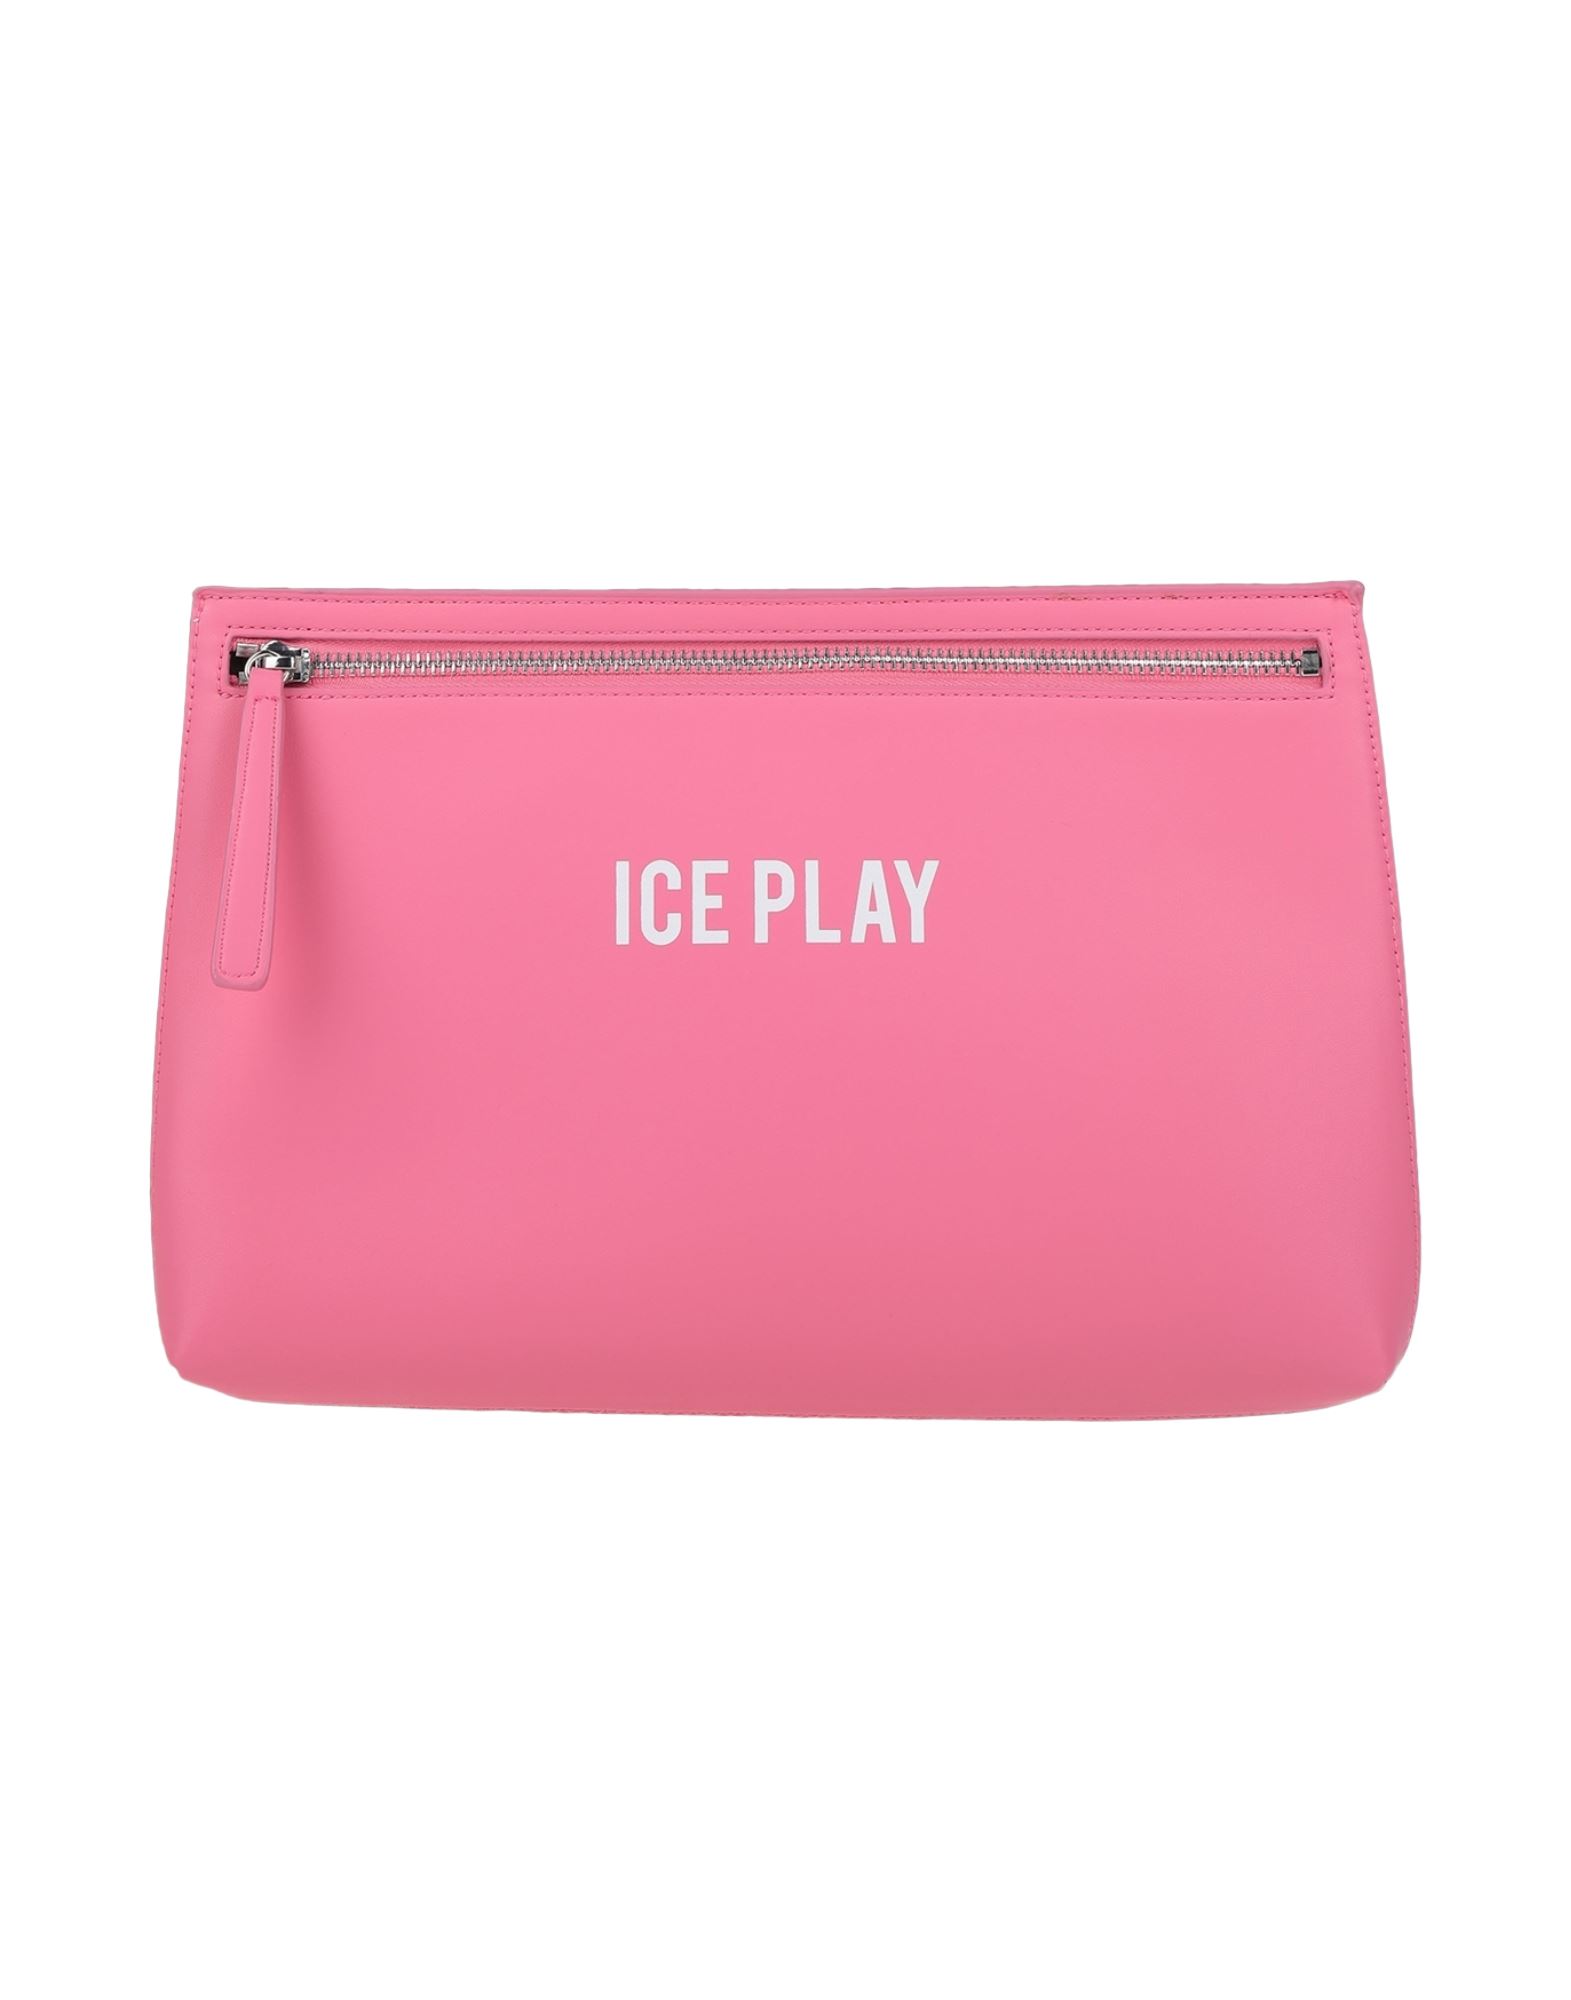 ICE PLAY Handbags